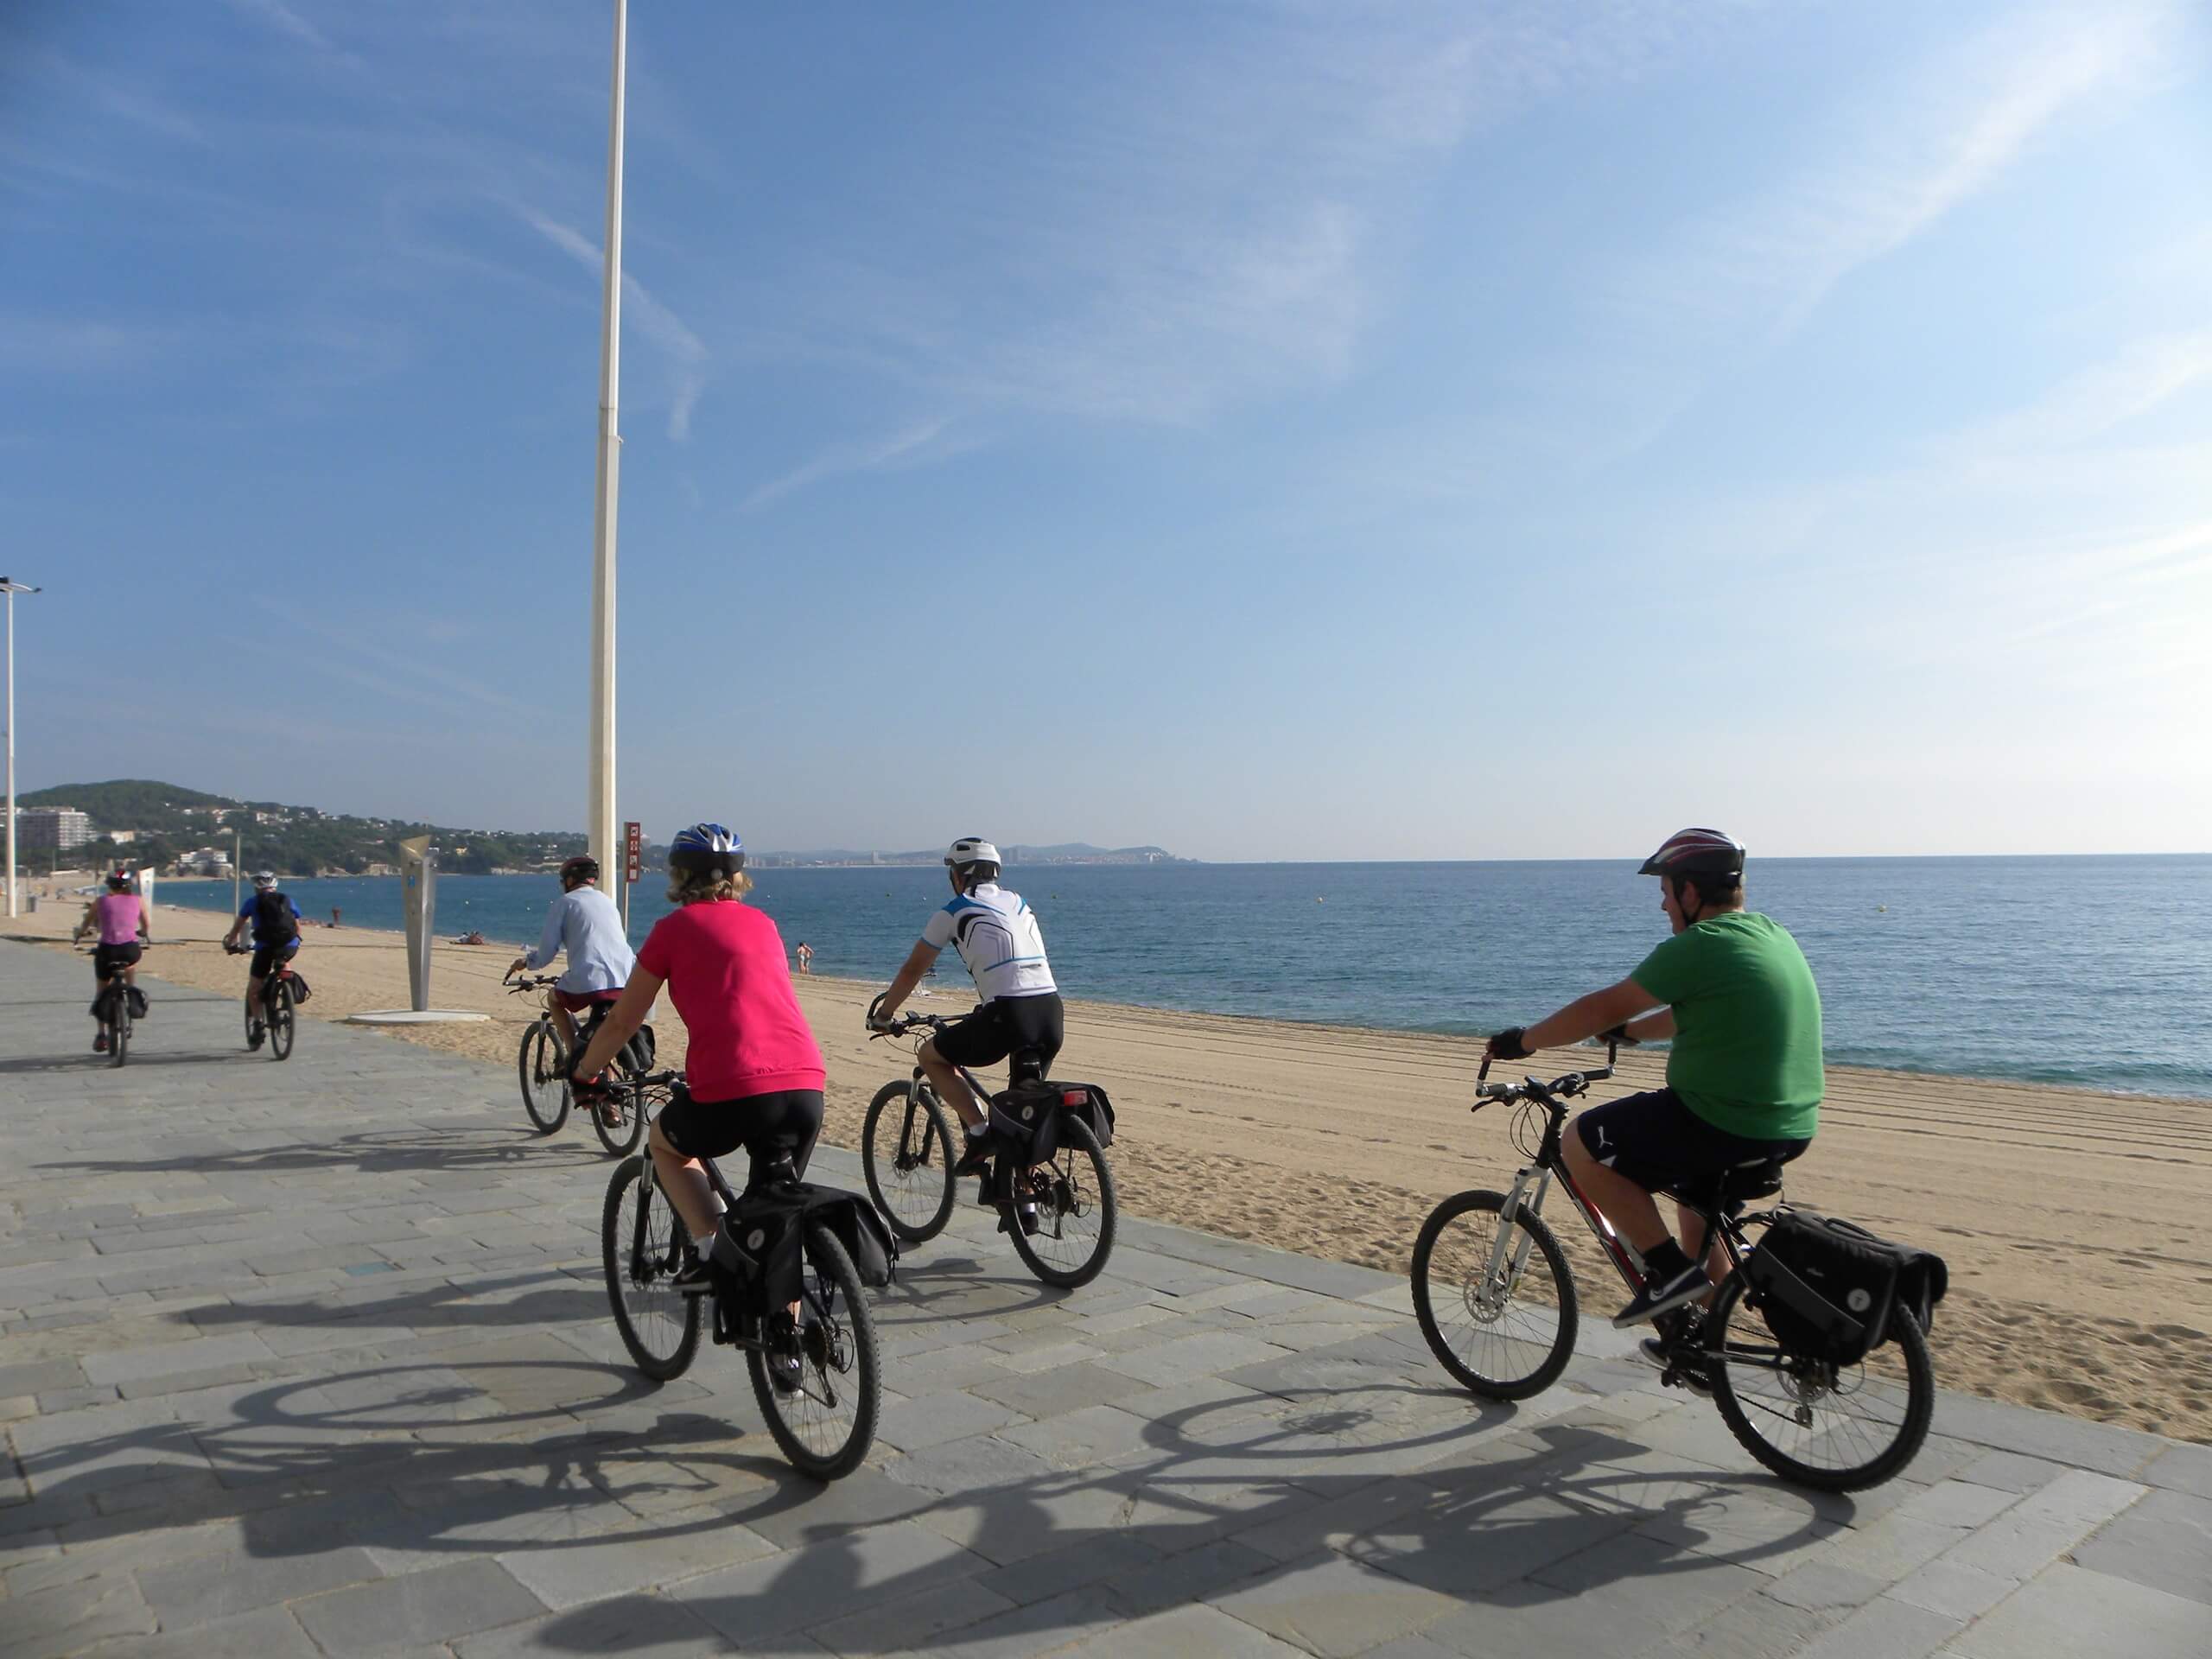 Biking along the Playa Costa Brava